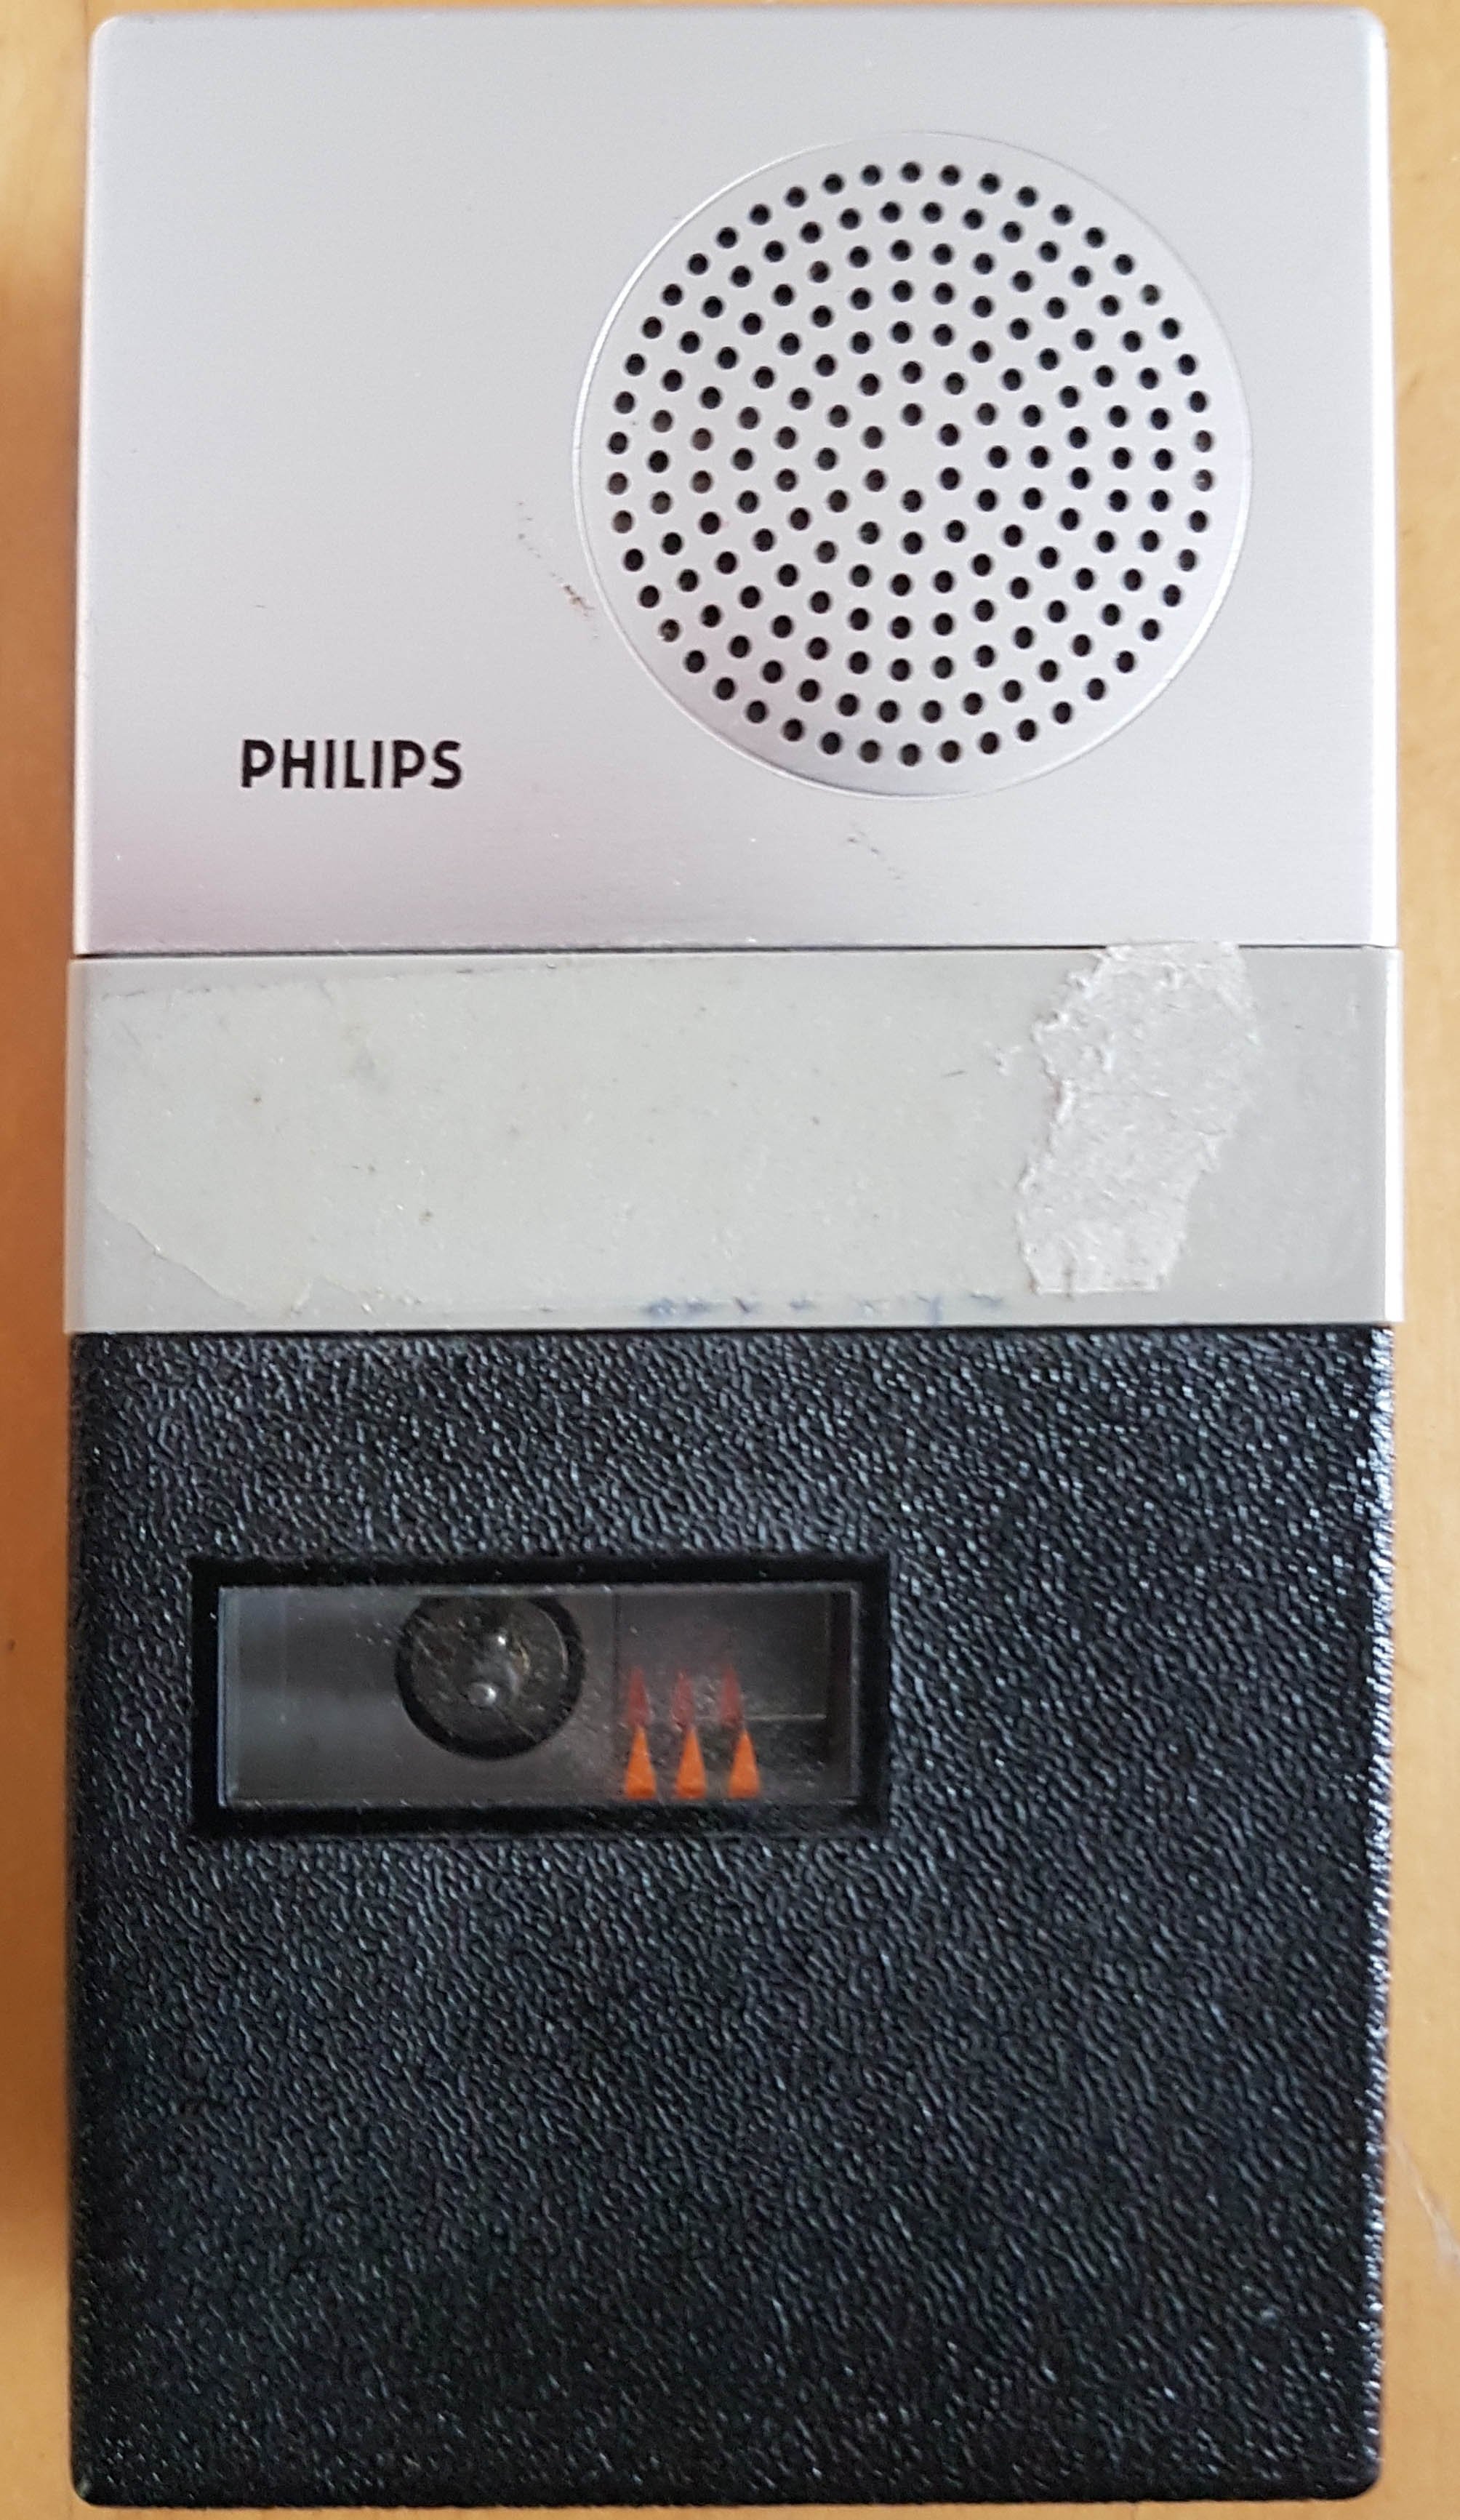 Philips Pocket Memo (museum comp:ex CC BY-NC-SA)